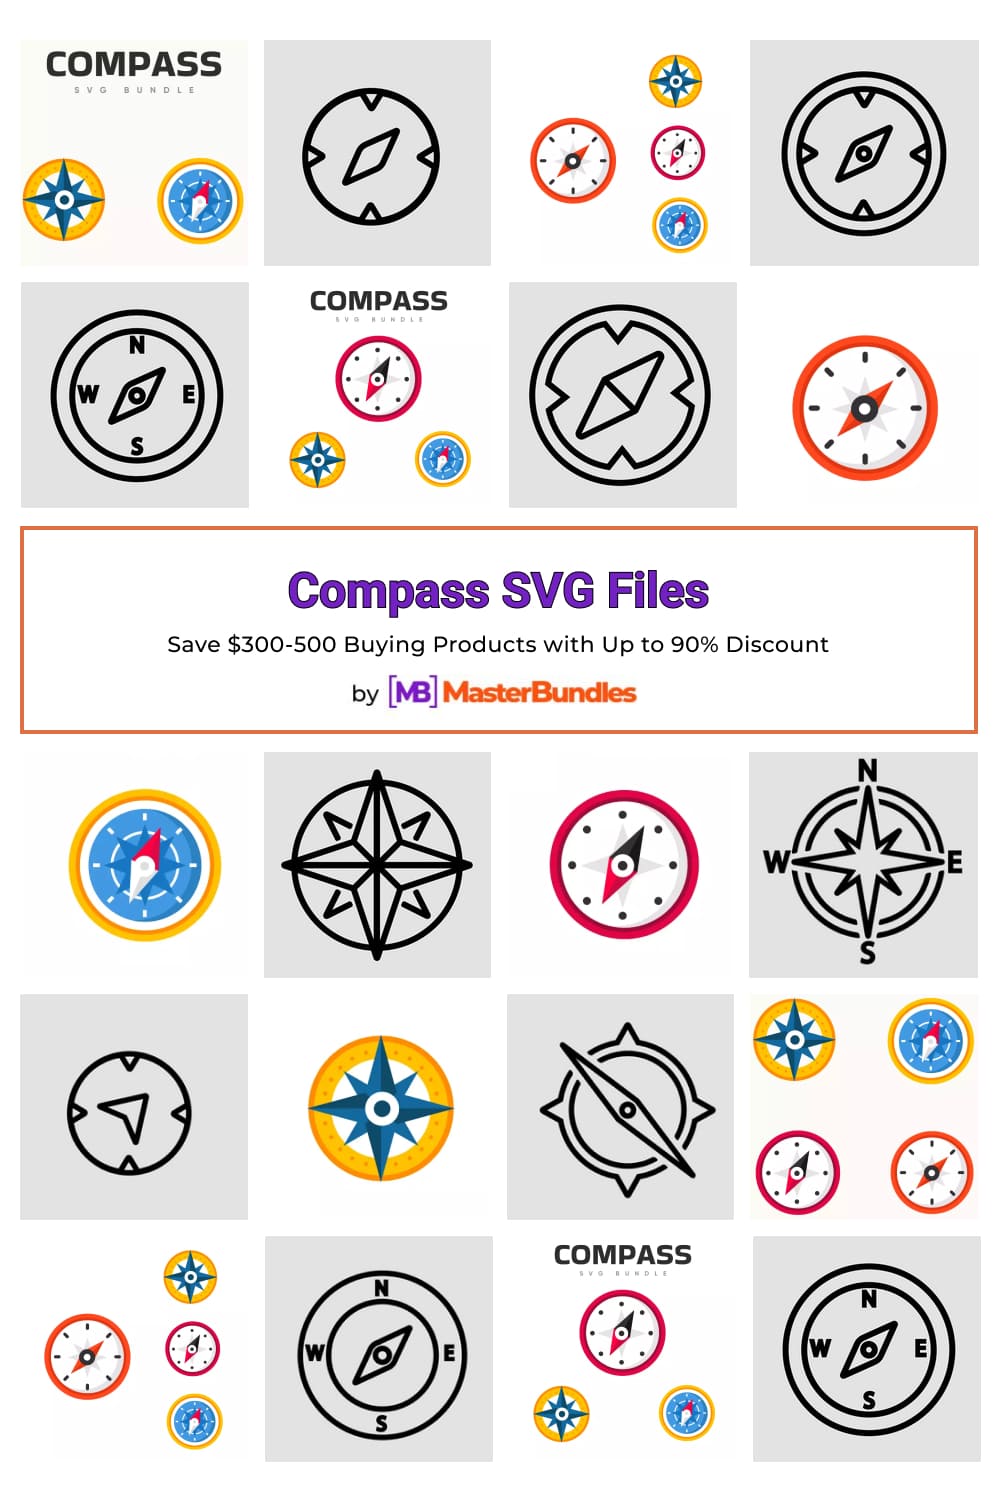 Compass SVG Files Pinterest image.